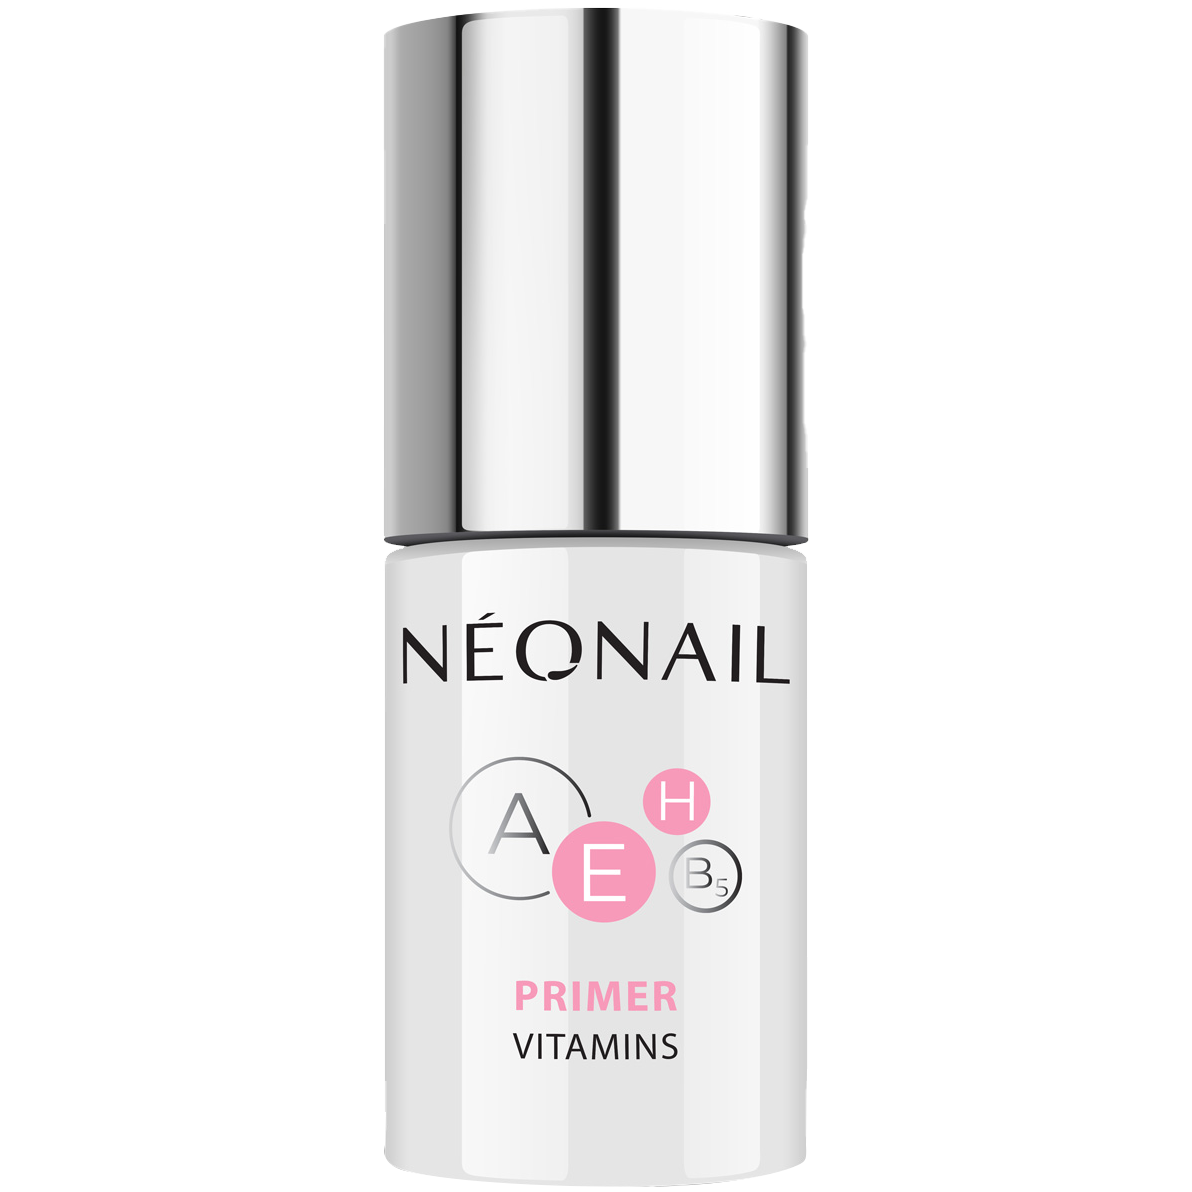 Neonail Primer Vitamins витаминный праймер для ногтей, 7,2 мл